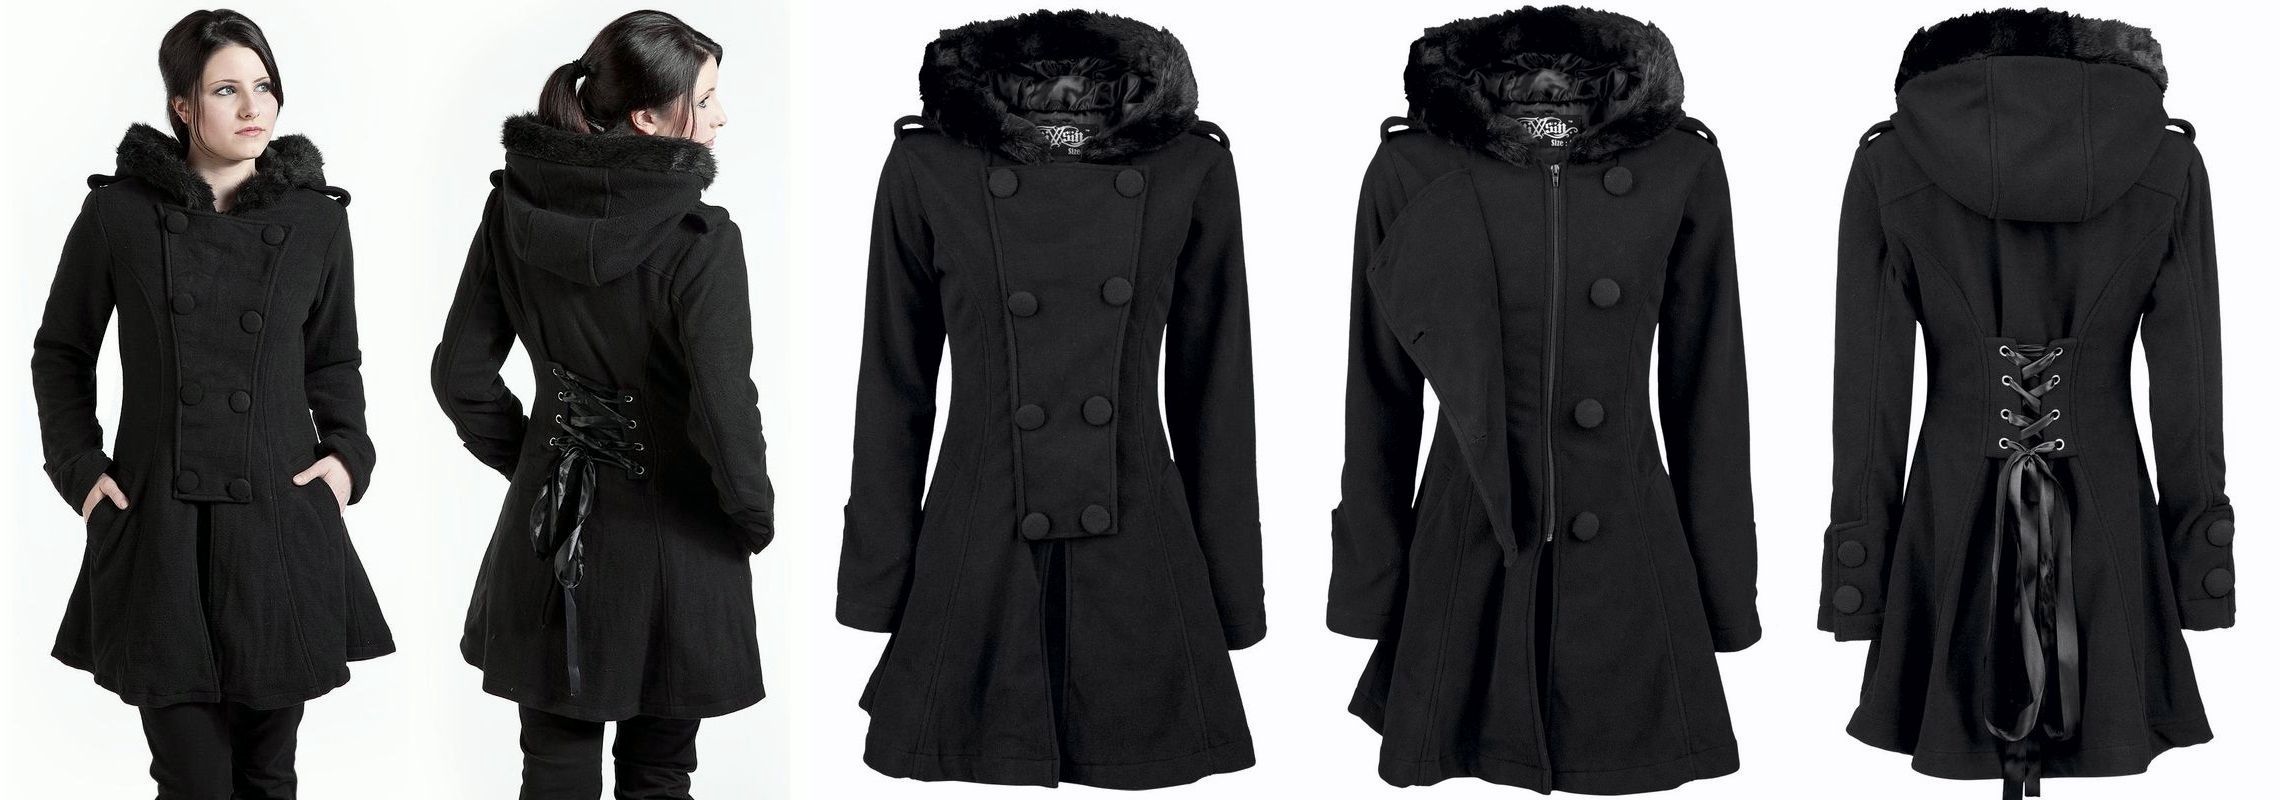 Gotický kabát dámský Lisa